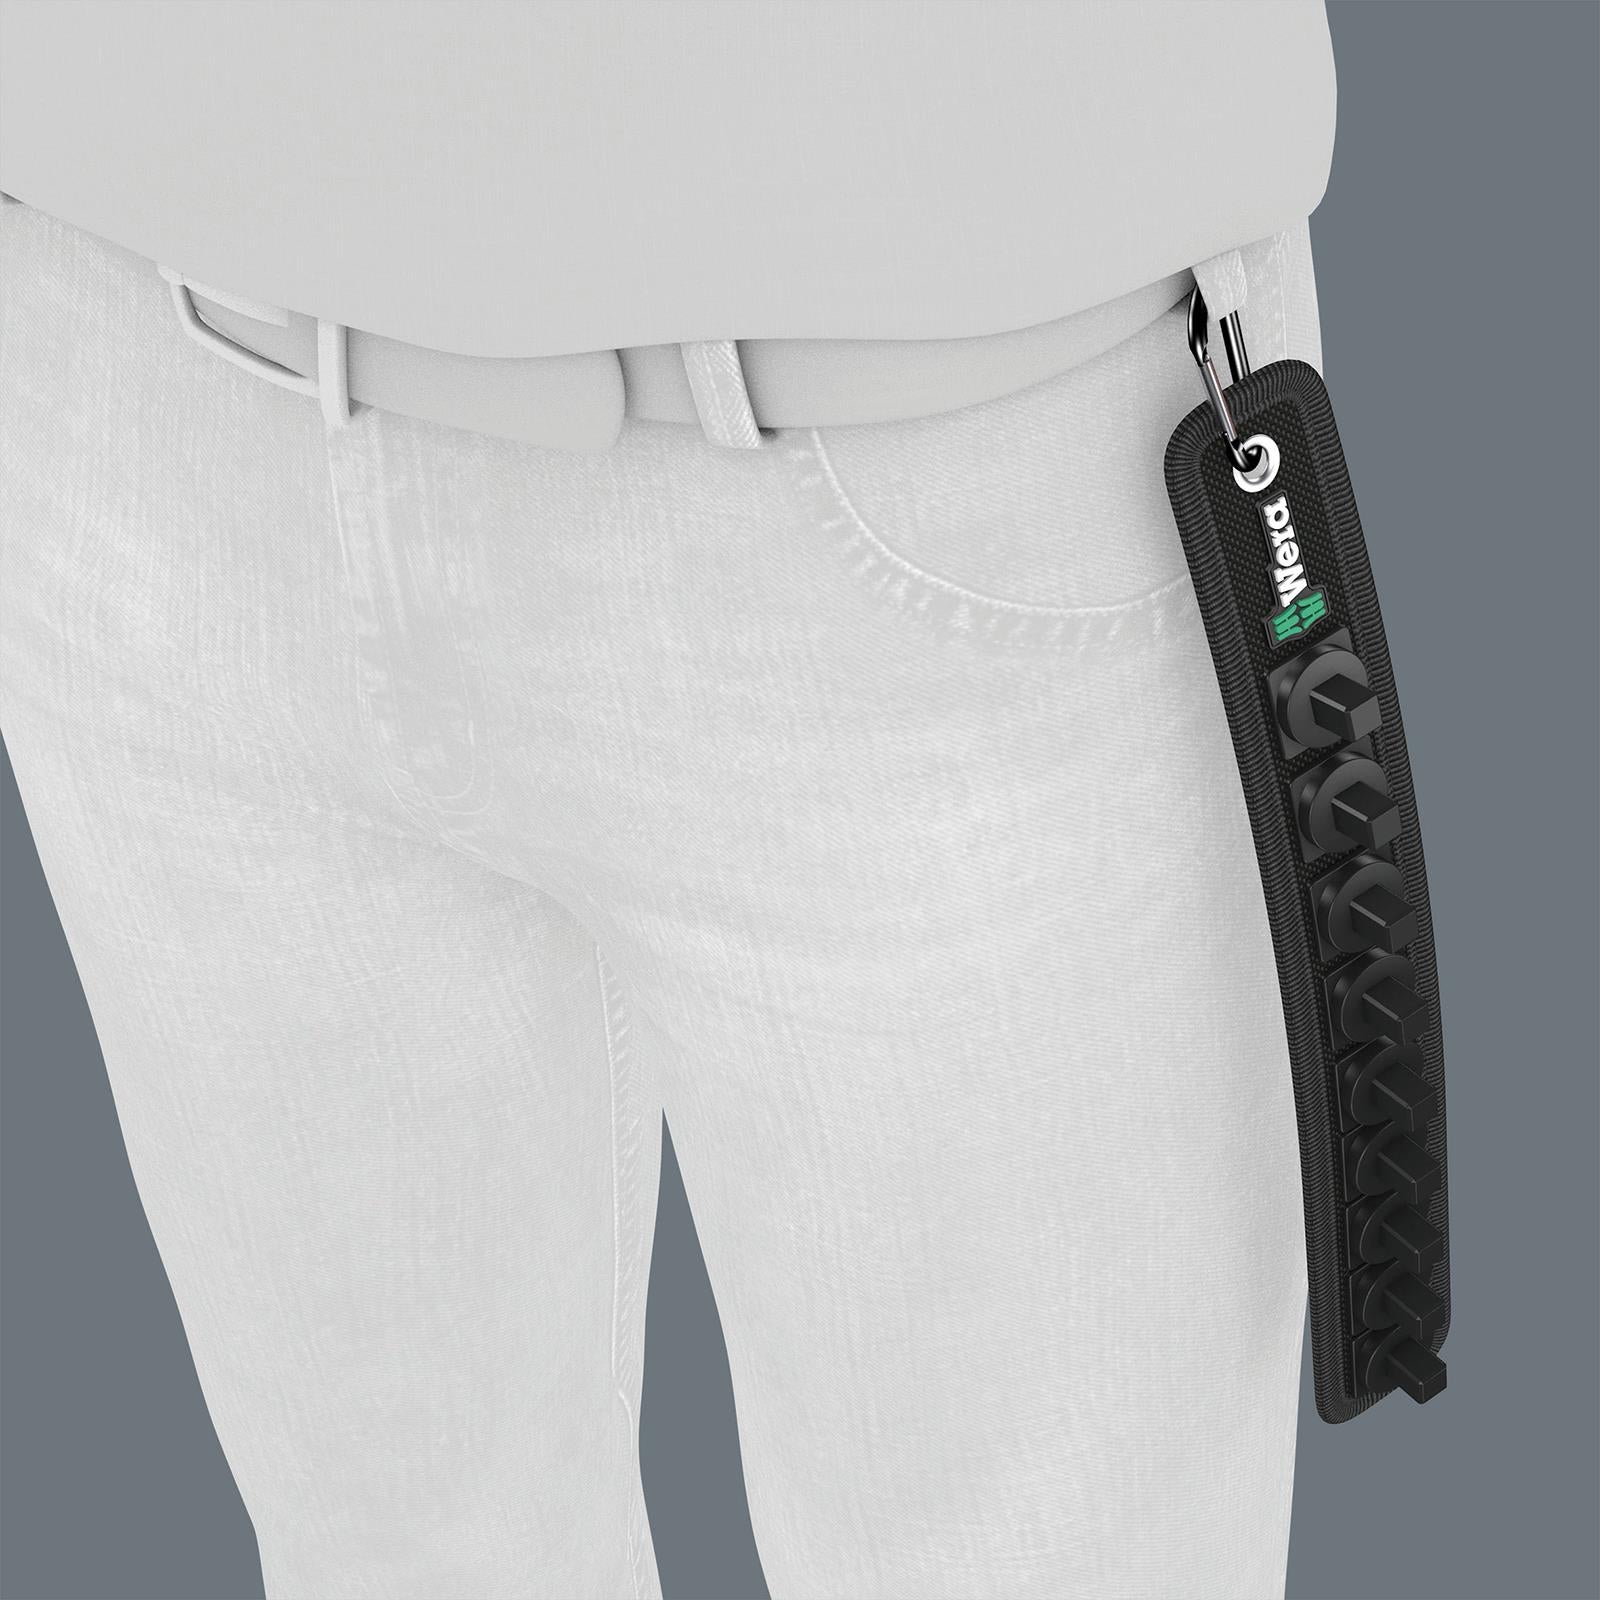 Wera Socket Rail B 3/8" Drive Textile Belt with Carabiner 9 Location Twist to Unlock Unloaded